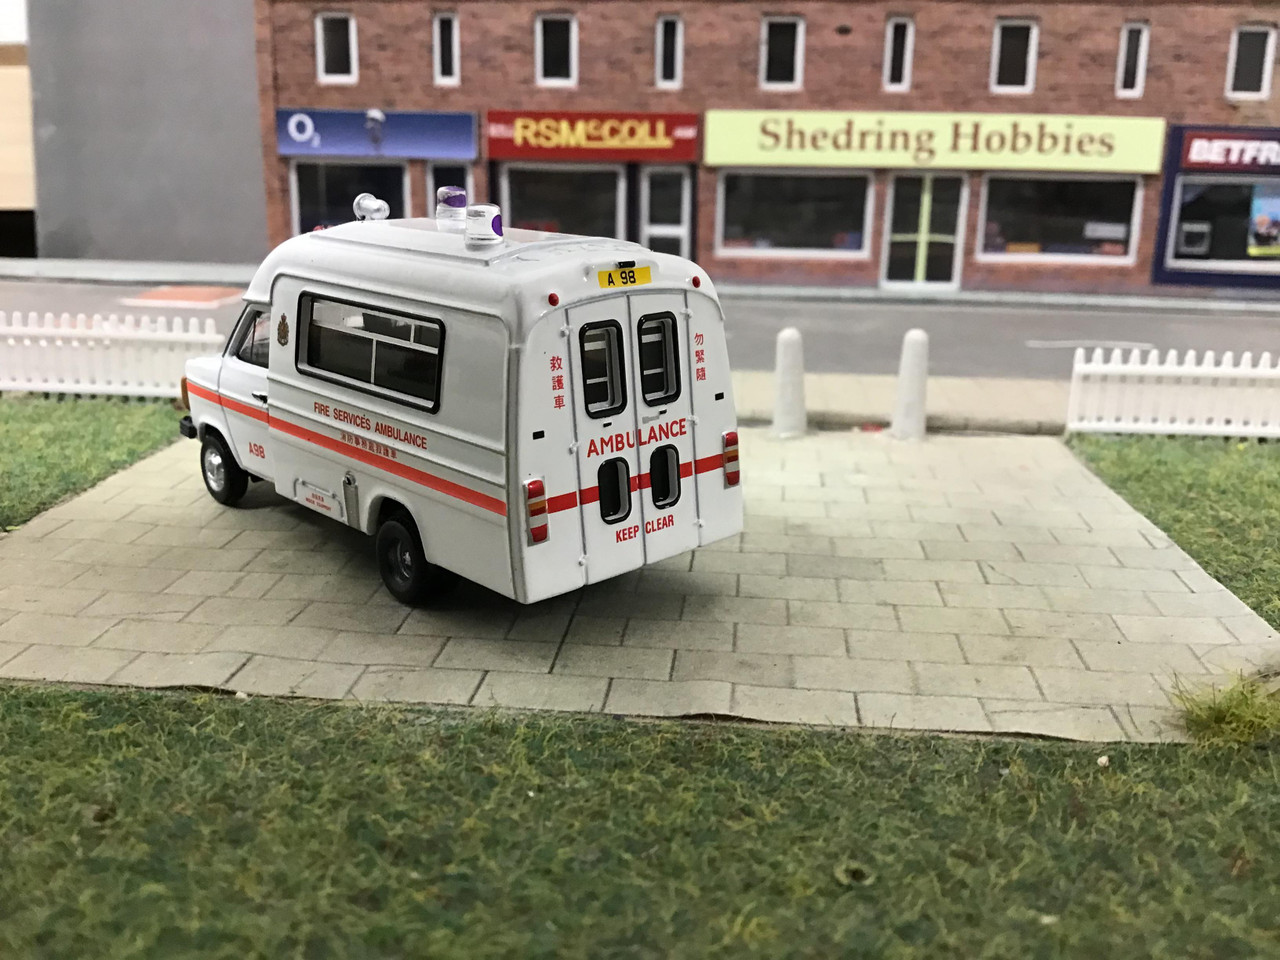 Tiny City 1:76 1980's Ambulance (A98) HKFSD